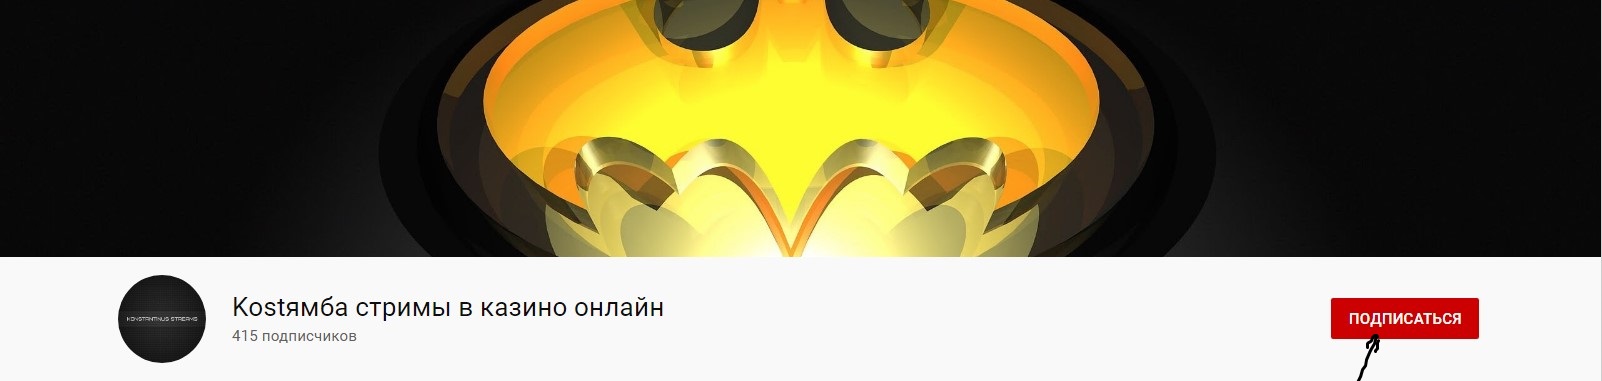 (1) Kostямба стримы в казино онлайн - YouTube - Opera 2019-11-14 19.36.09.jpg